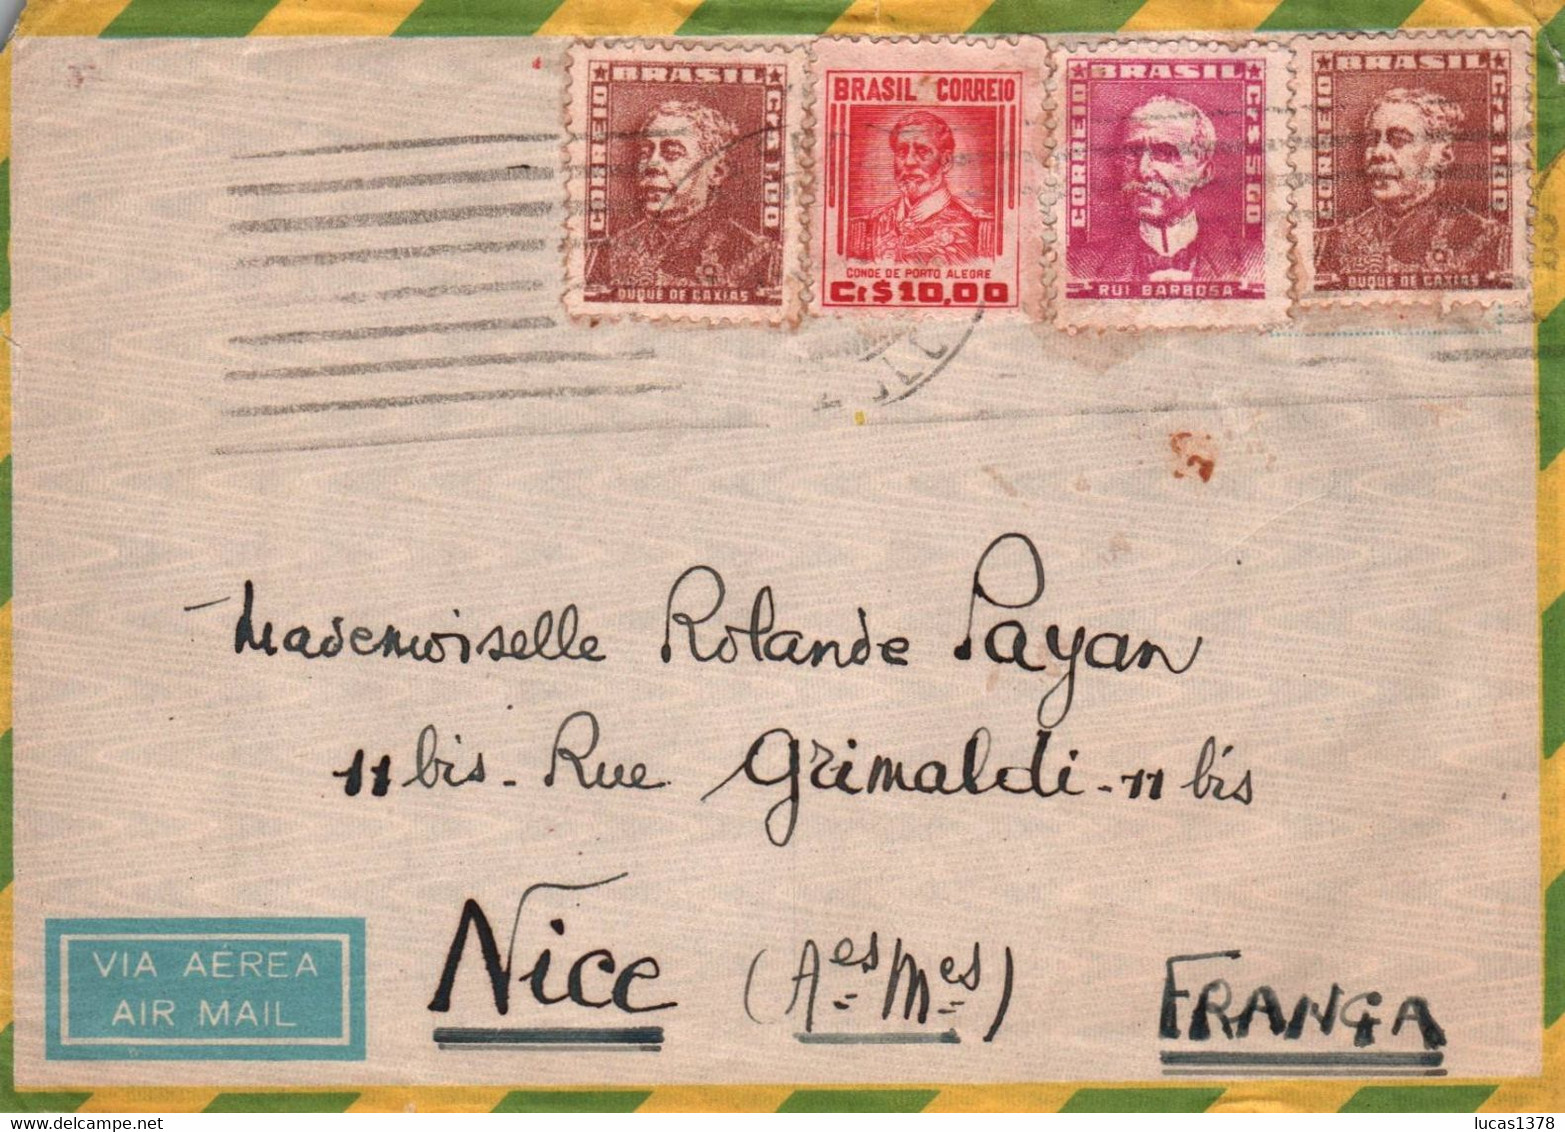 BRASIL / 1961 FOR NICE FRANCE  / VIA AEREA / AIR MAIL / PICTURE ON BACK / NICE STAMPS - Briefe U. Dokumente